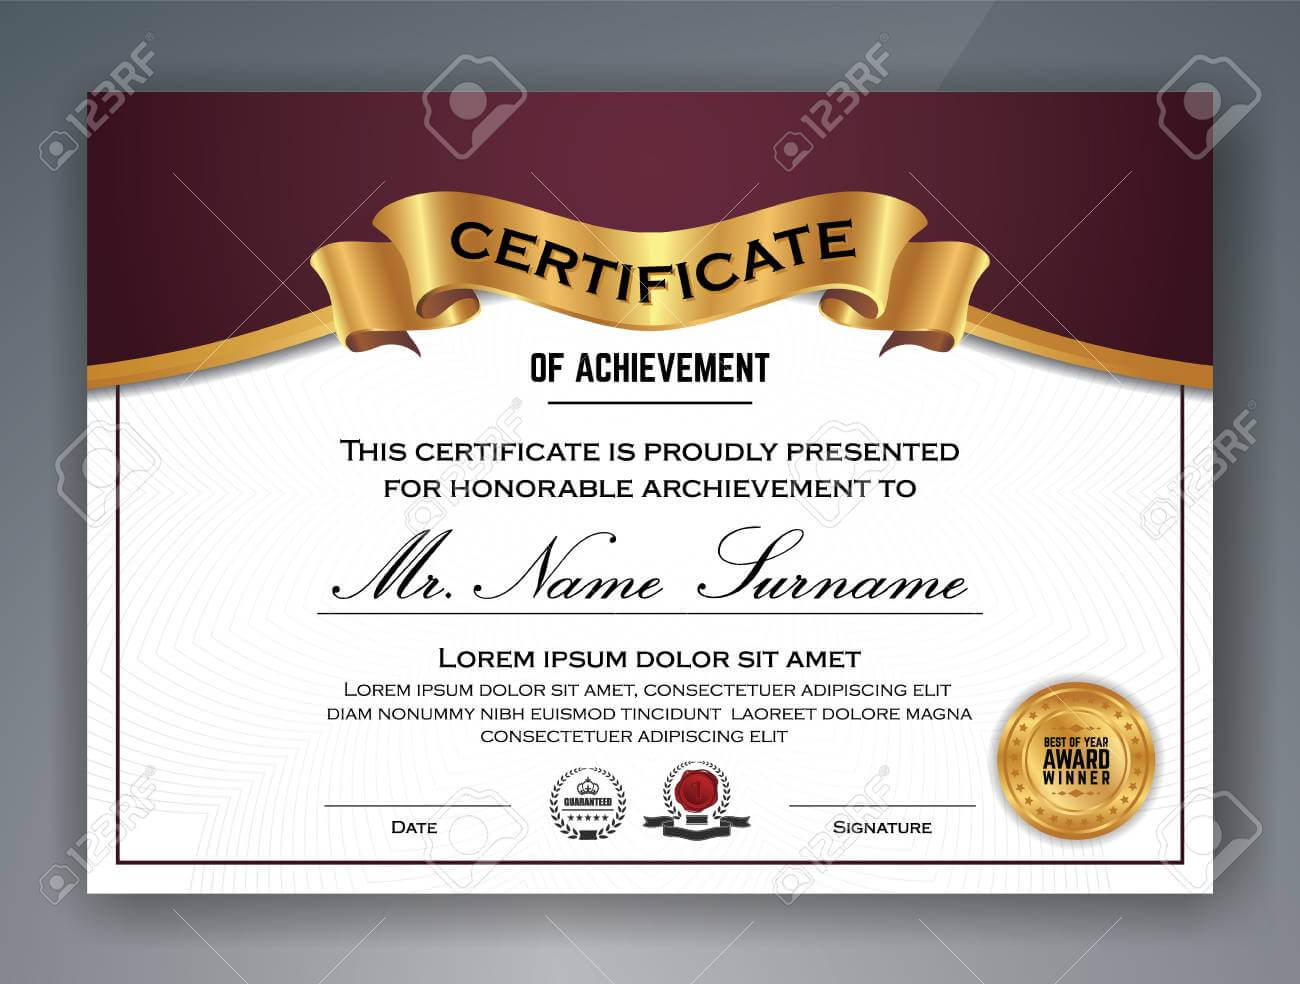 Professional Award Certificate Template – Yatay With Regard To Professional Award Certificate Template